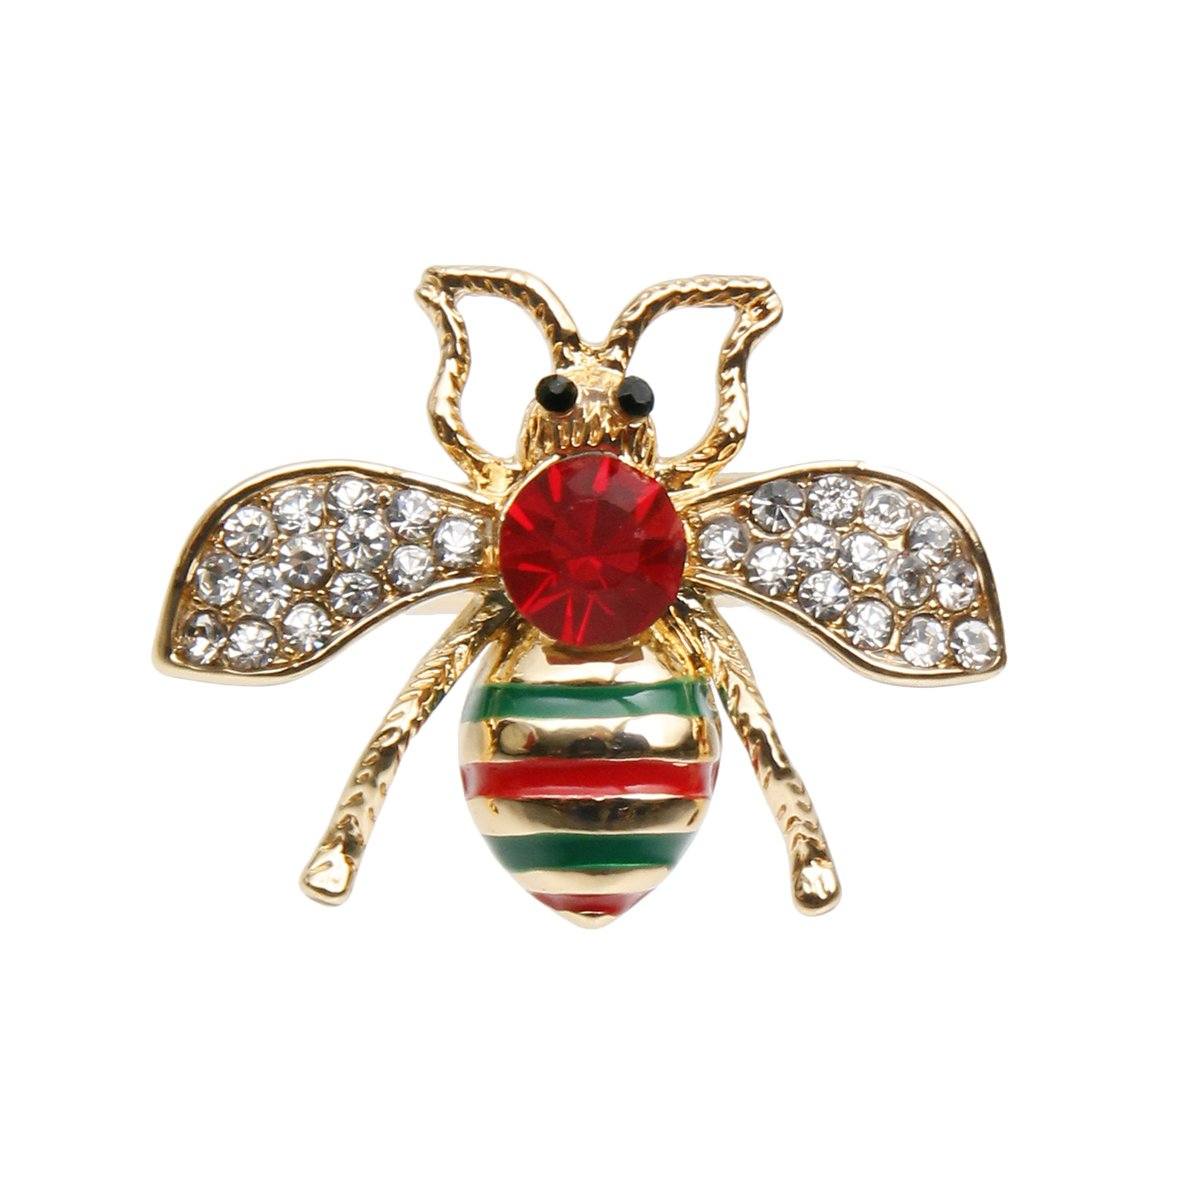 Designer Style Rhinestone Bee Stretch Ring with Red Rhinestone Detail